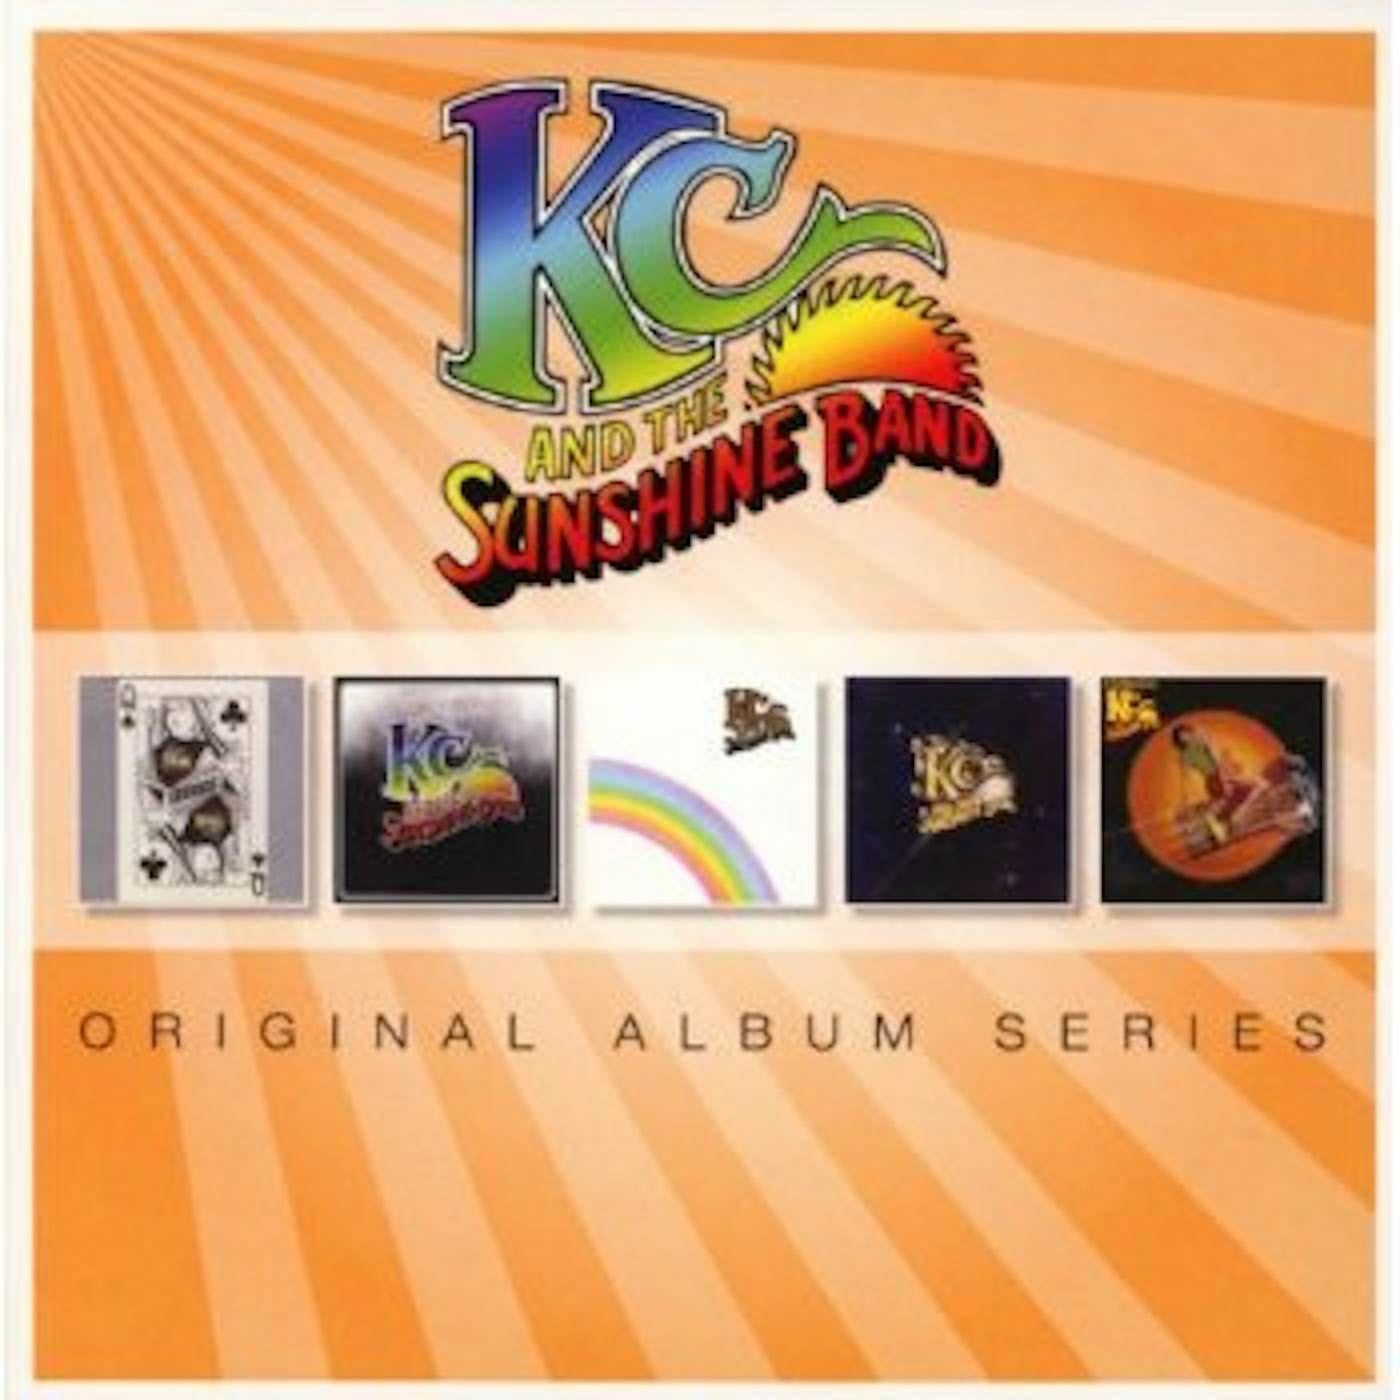 K.C. & SUNSHINE BAND ORIGINAL ALBUM SERIES CD